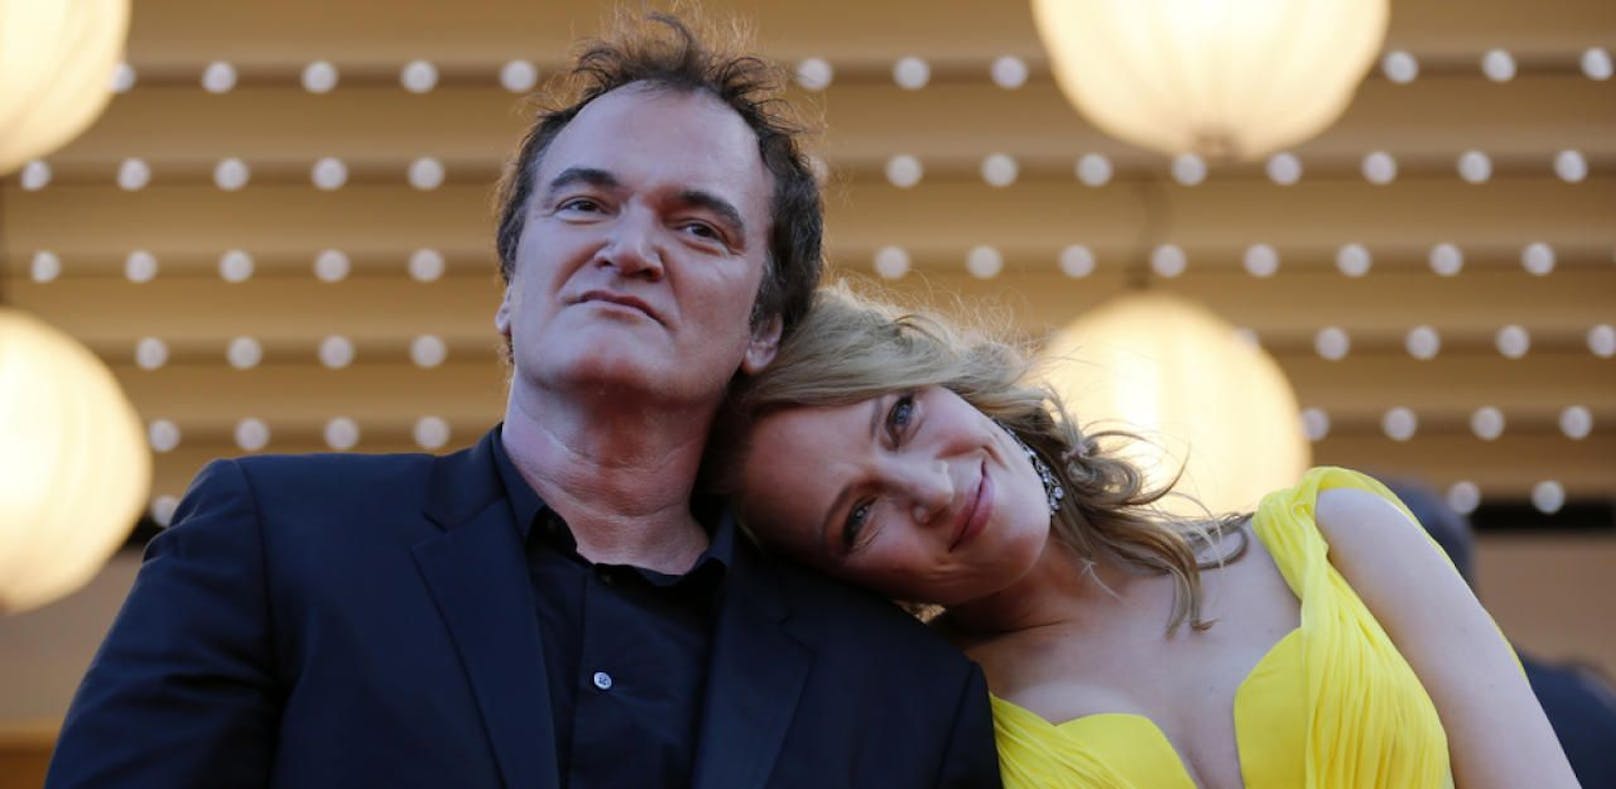 Tarantino spricht mit Uma Thurman über "Kill Bill 3"